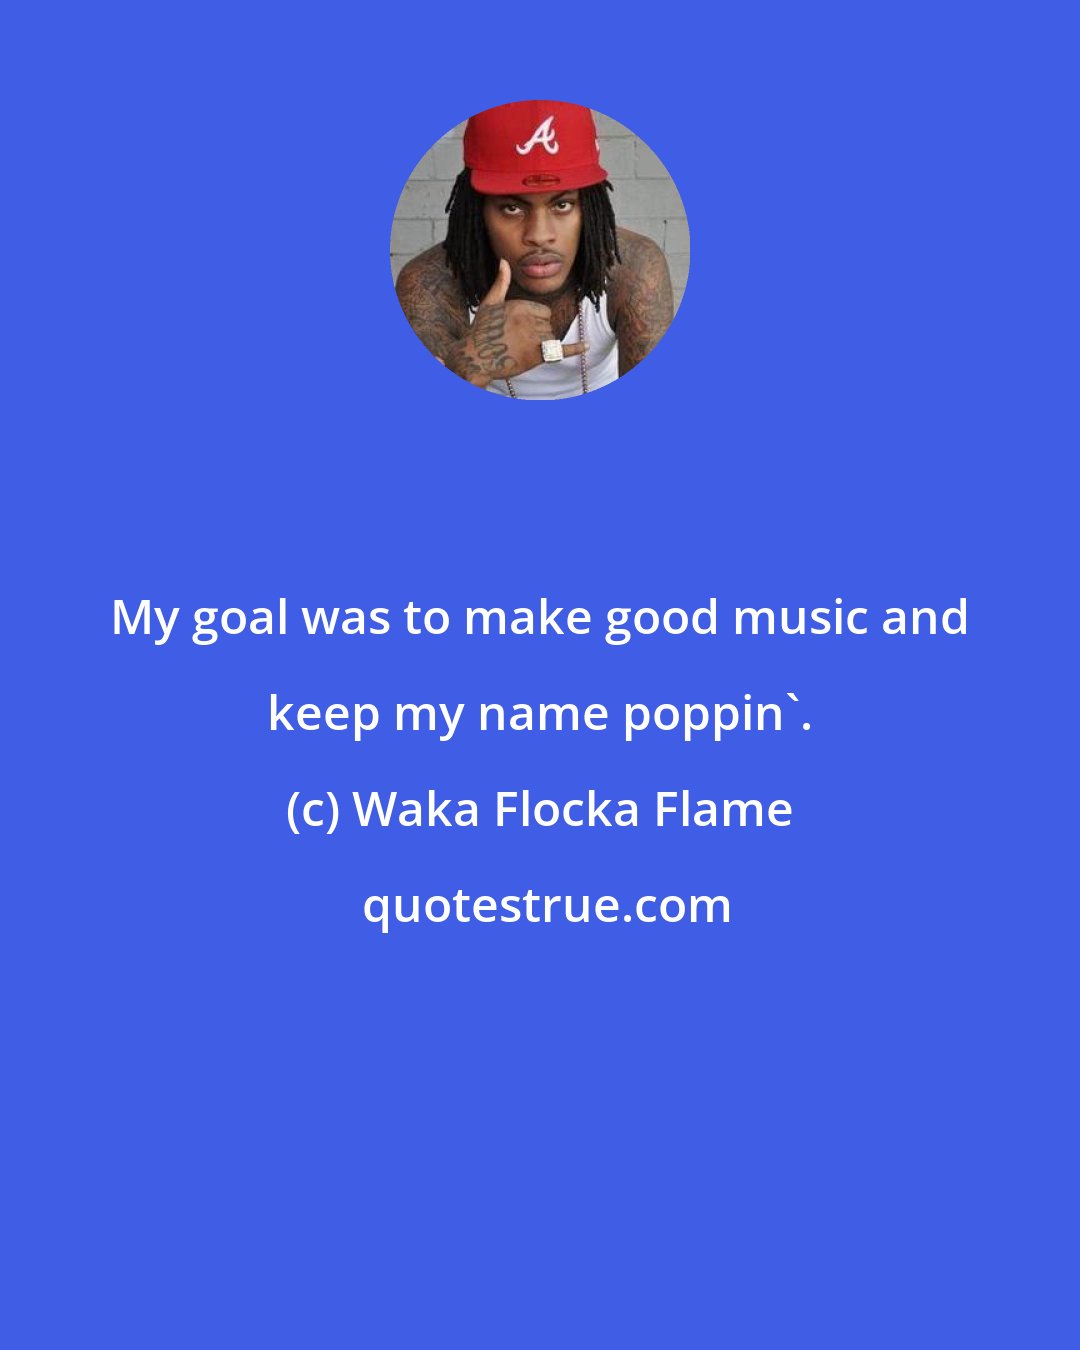 Waka Flocka Flame: My goal was to make good music and keep my name poppin'.